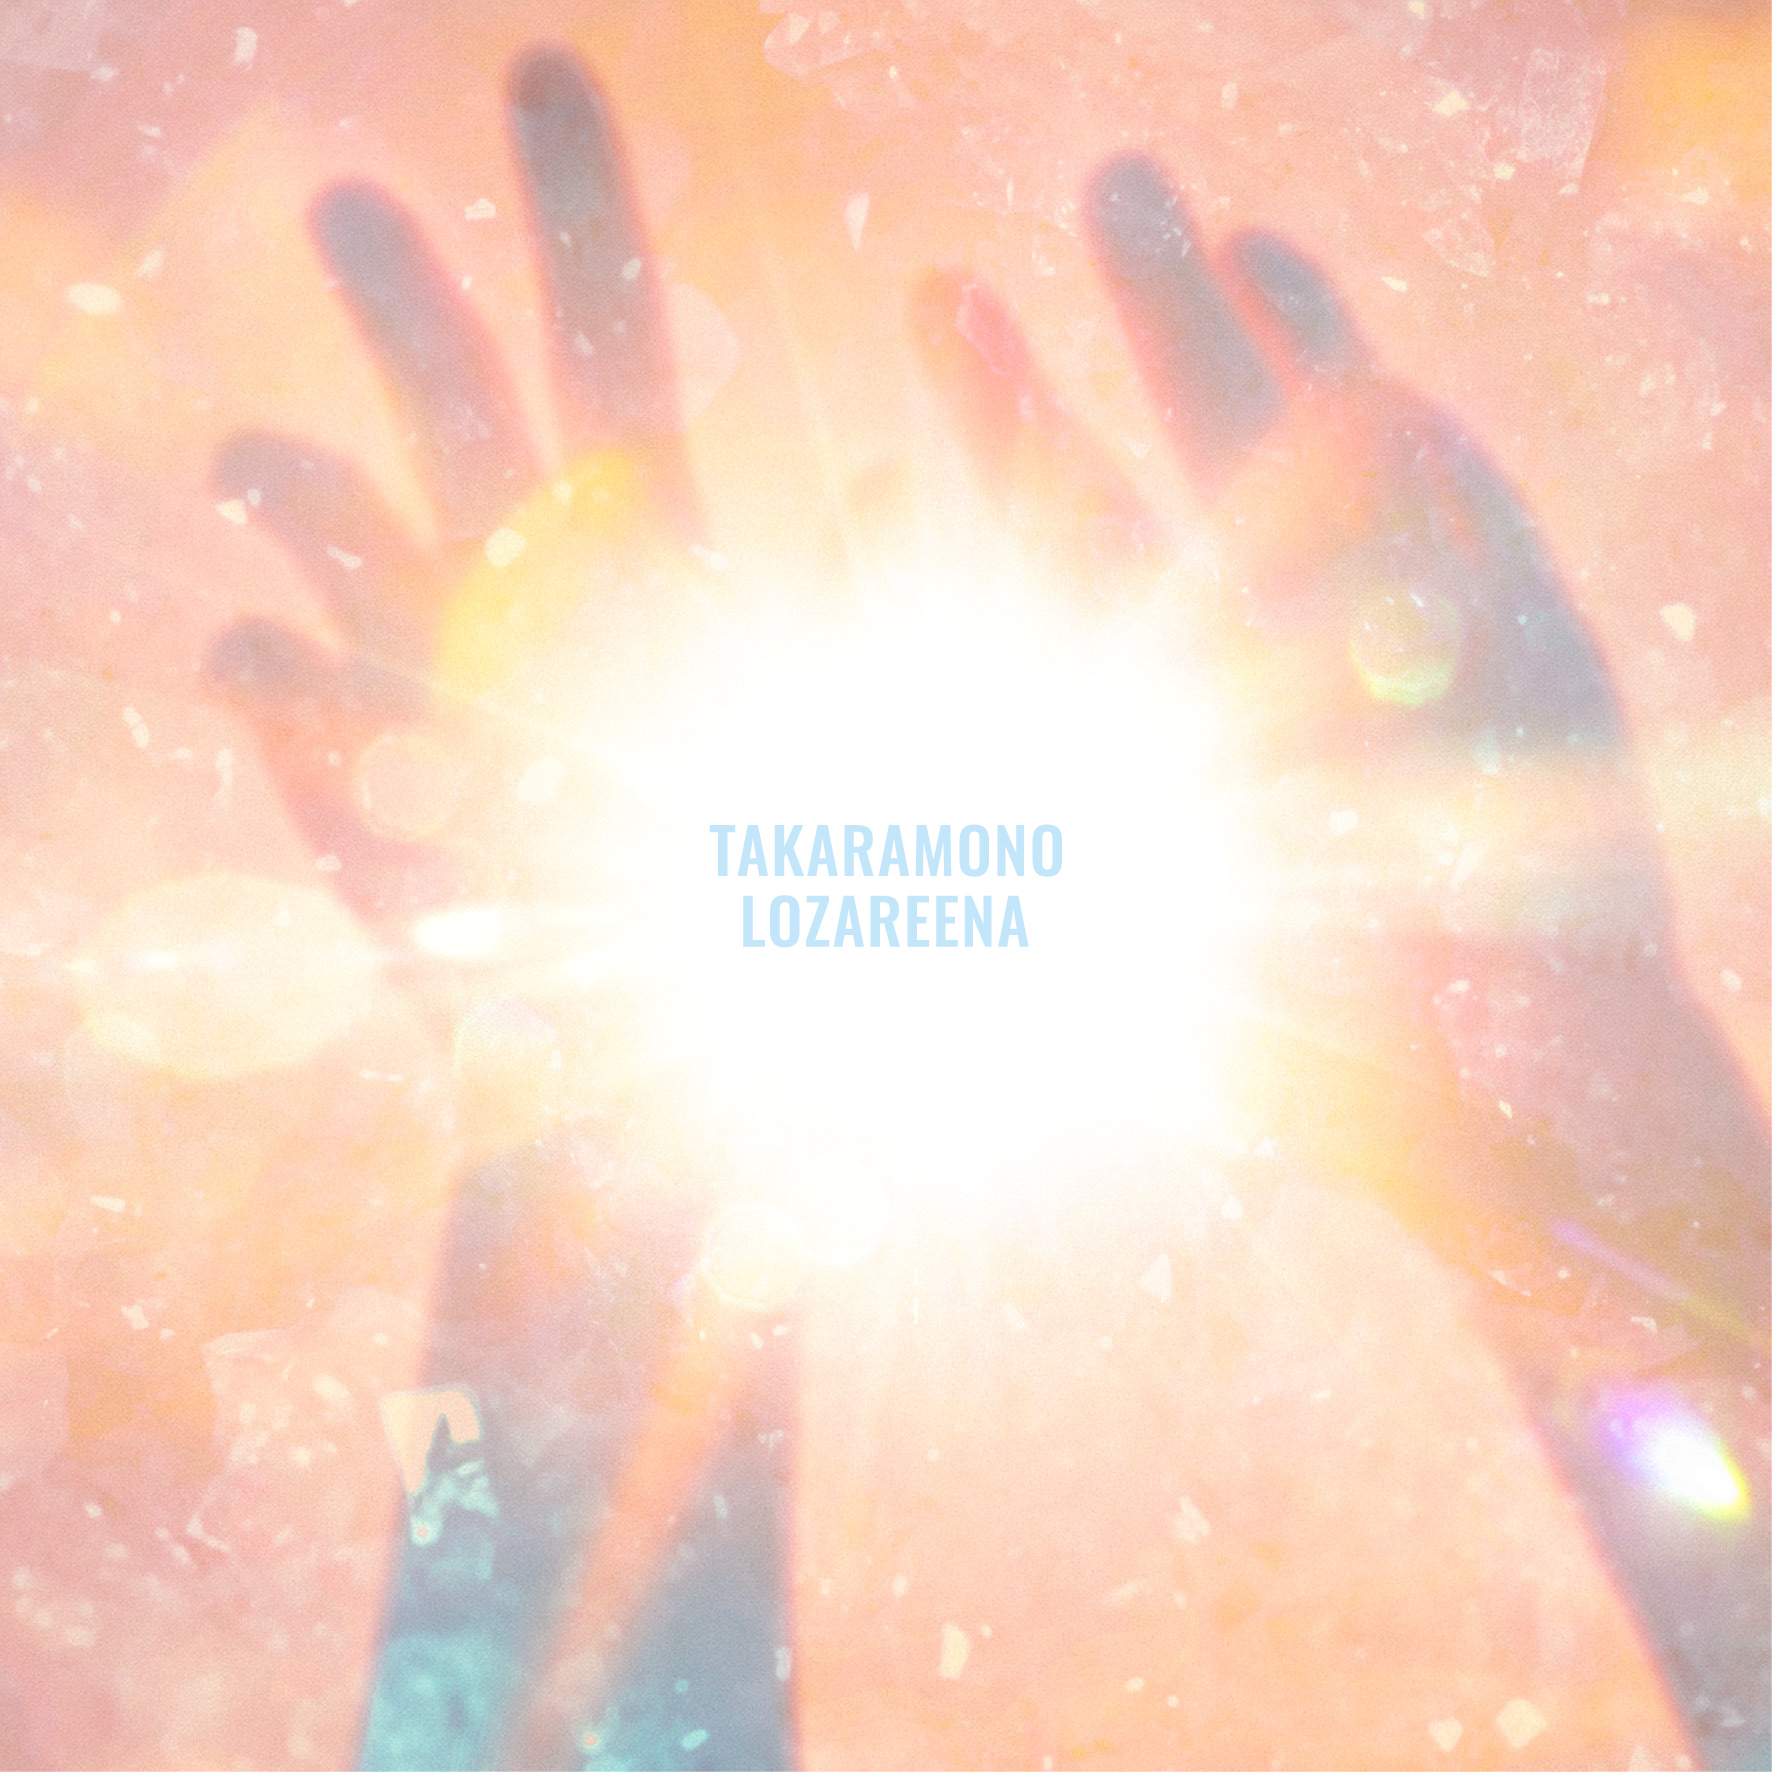 Digital single『タカラモノ』